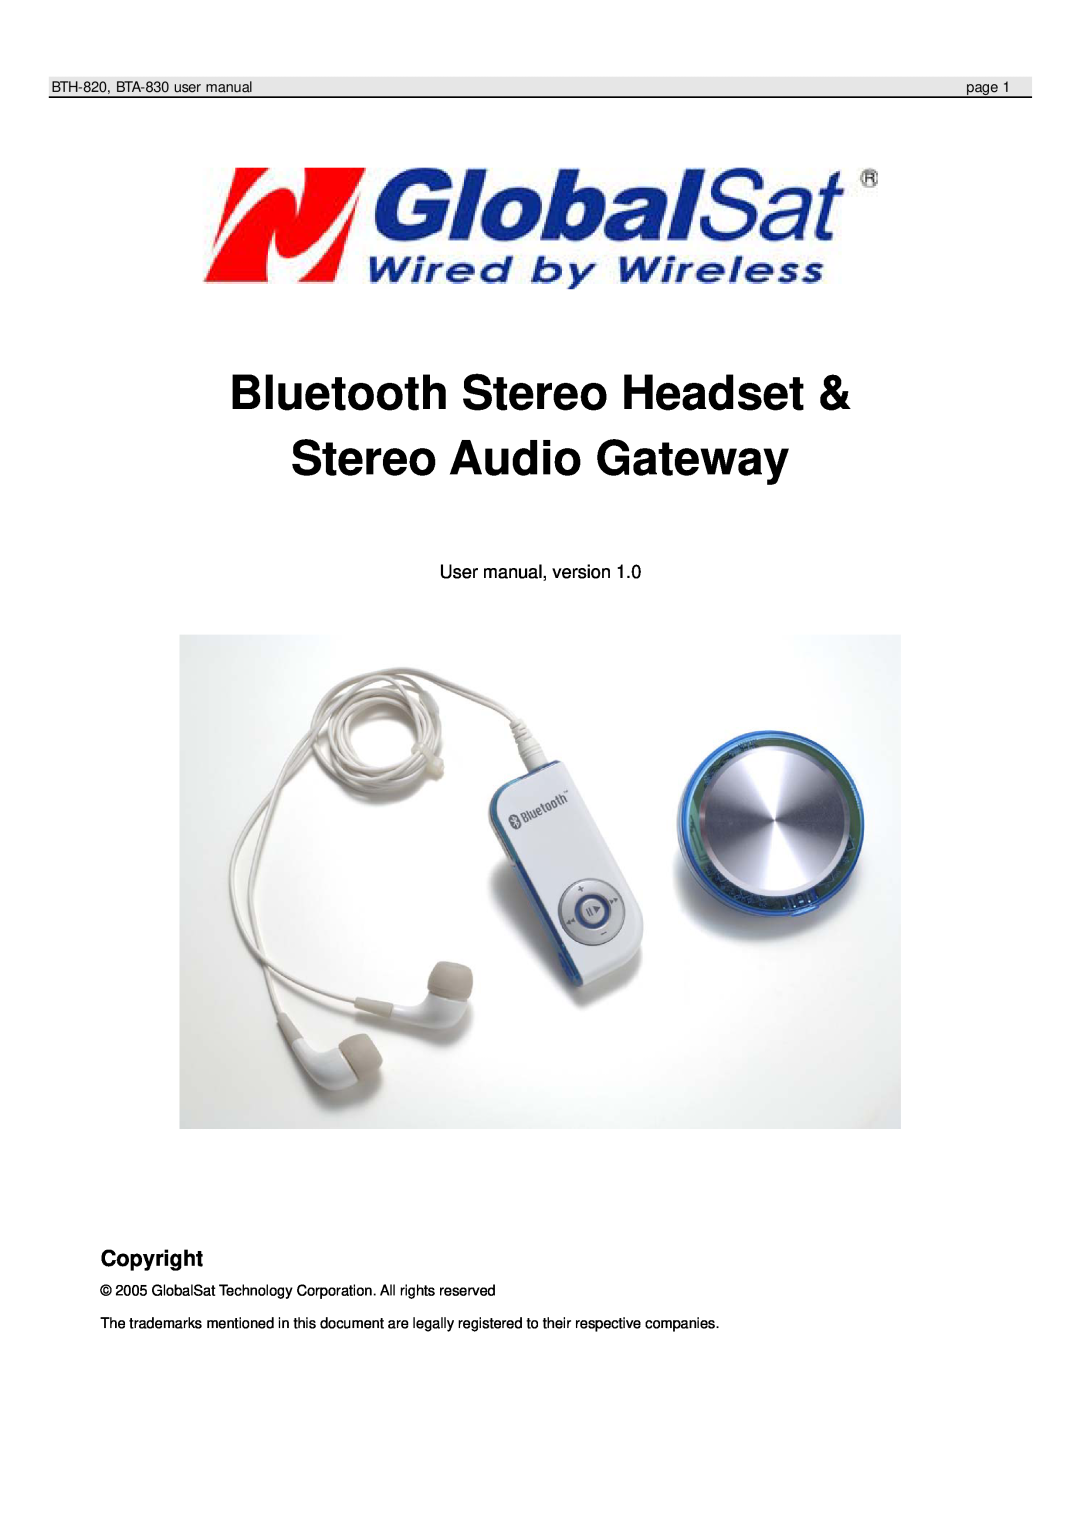 Globalsat Technology BTA-830, BTH-820 user manual Bluetooth Stereo Headset & Stereo Audio Gateway, Copyright 